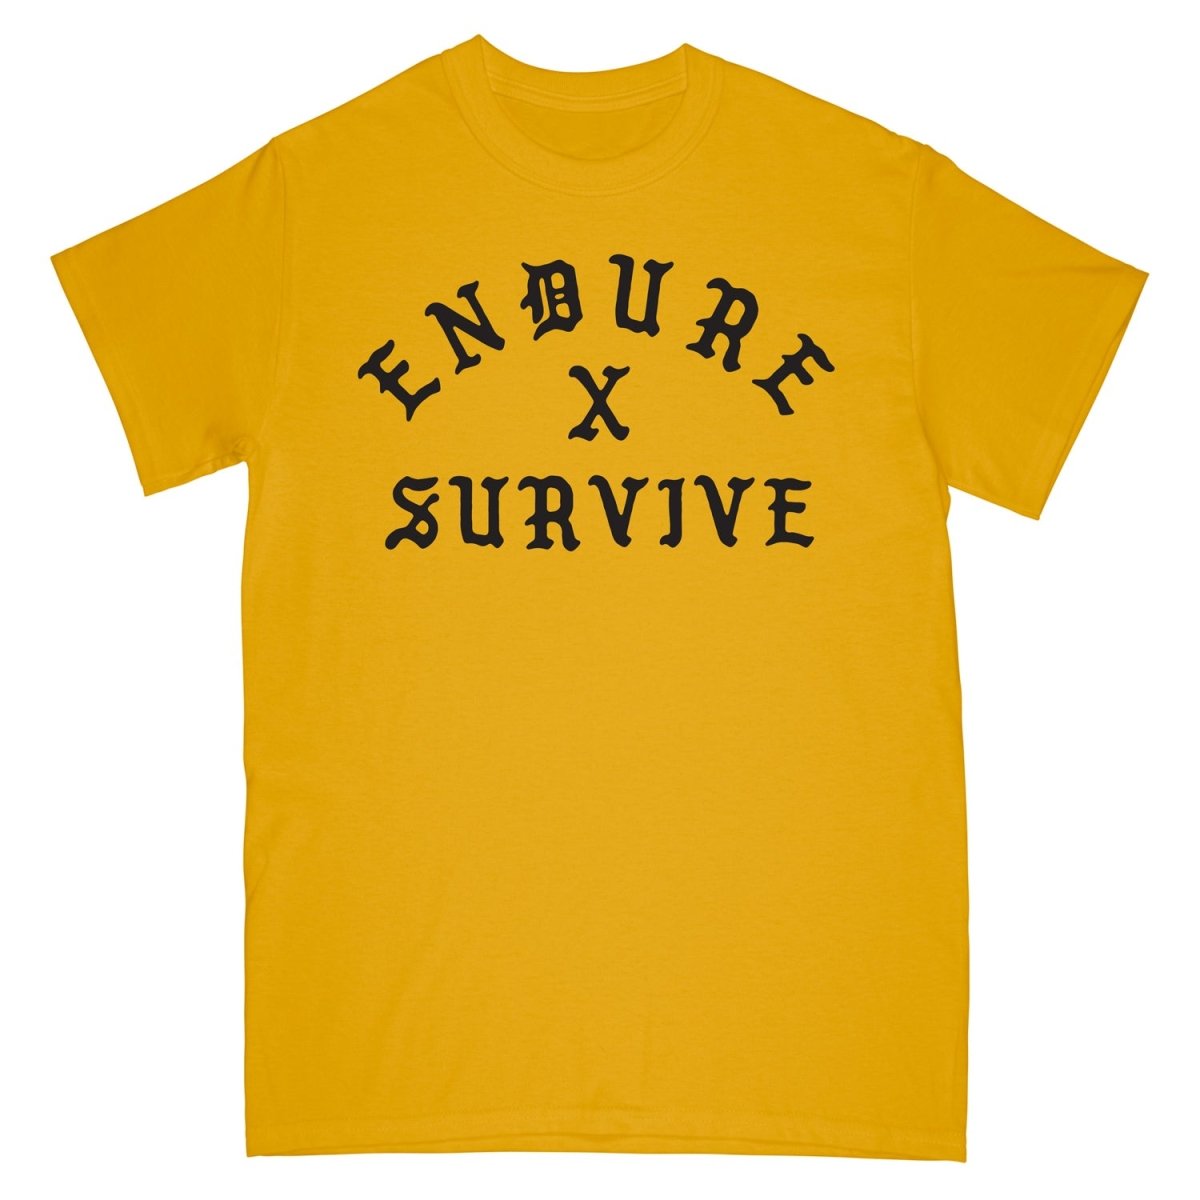 Endure x Survive T-Shirt Gold - T-Shirt - Pretty Bad Co.